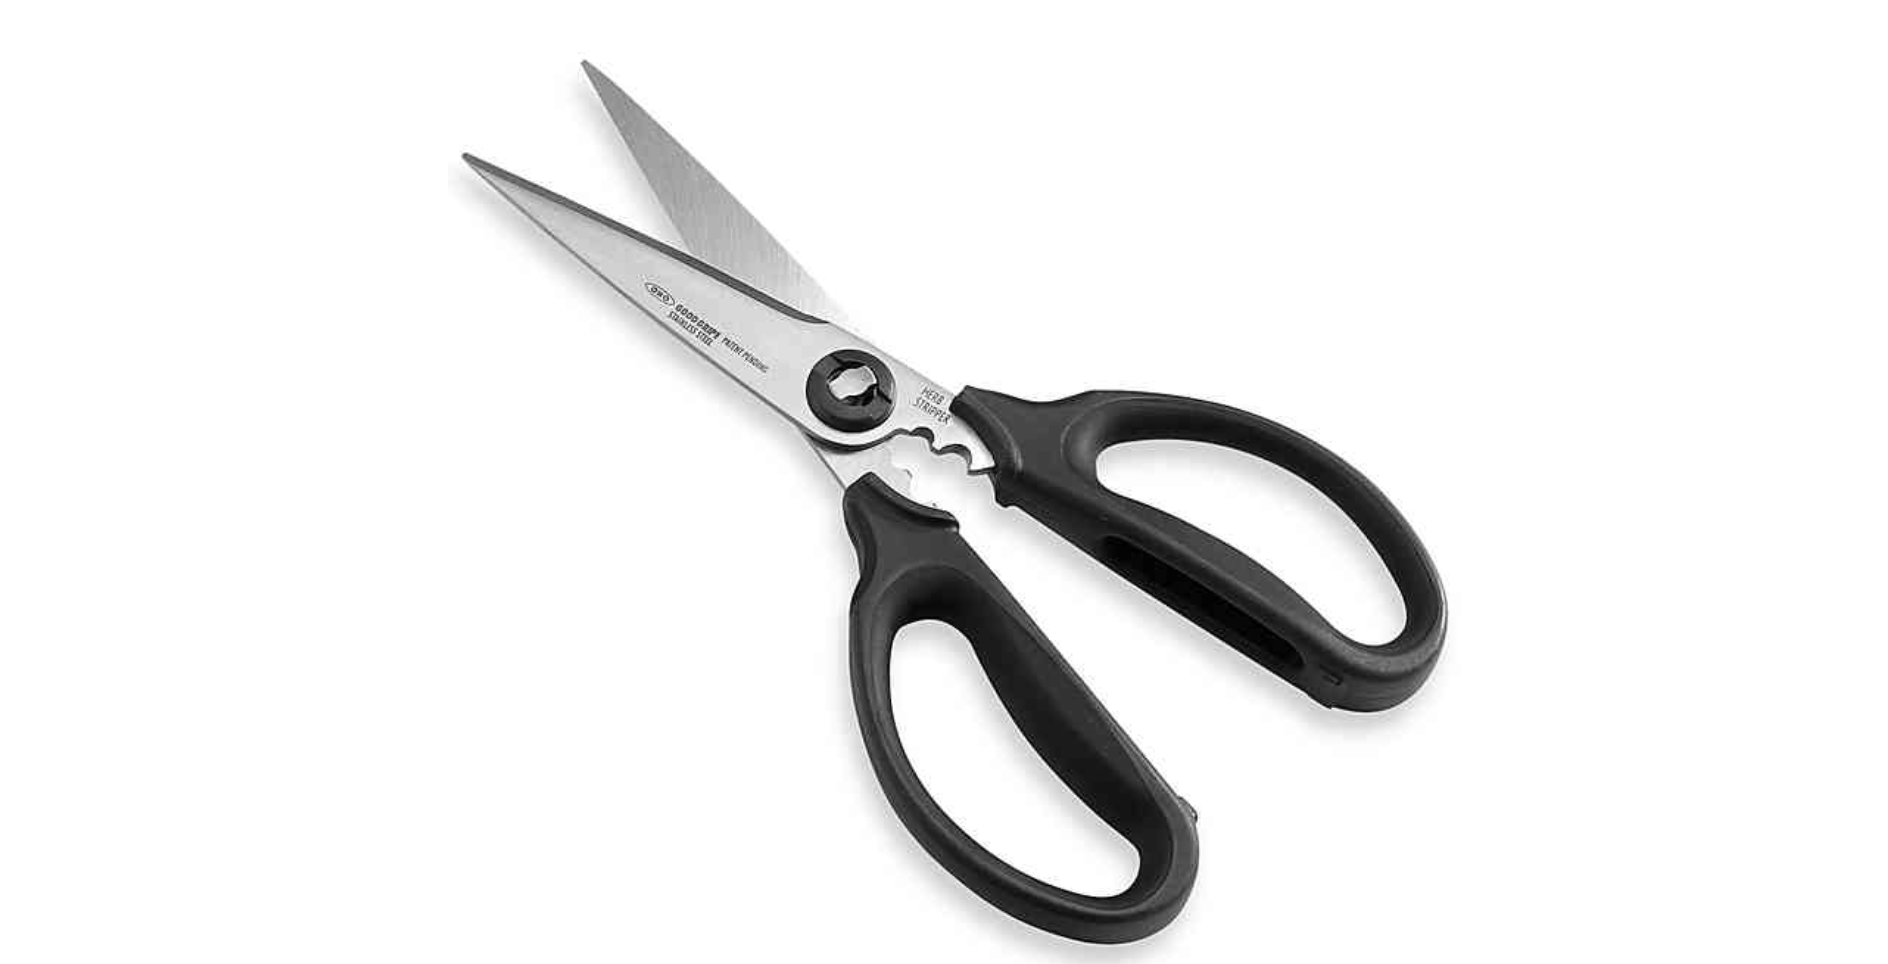 Herb scissors